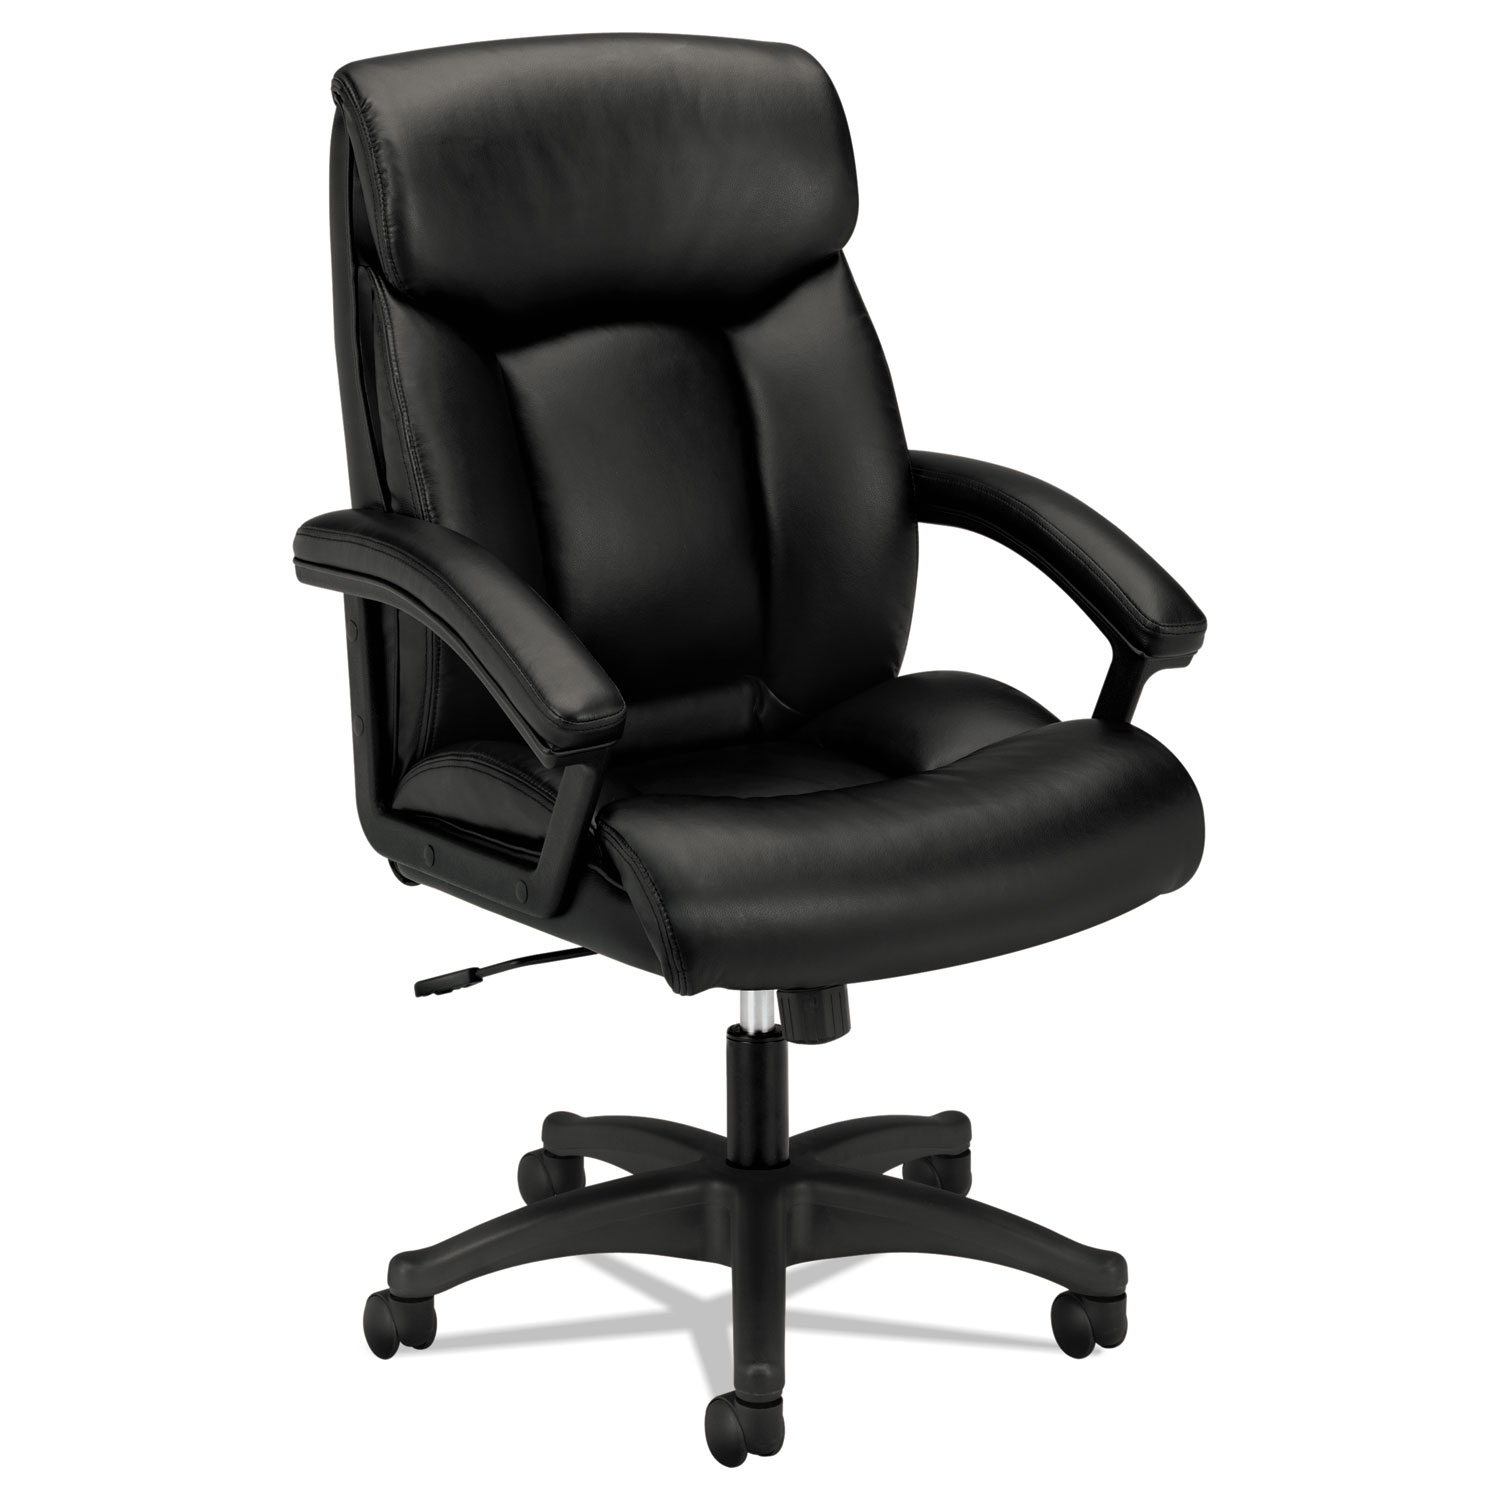  HON HVL151.SB11 HVL151 Executive High-Back Leather Chair, Supports up to 250 lbs., Black Seat/Black Back, Black Base (BSXVL151SB11) 